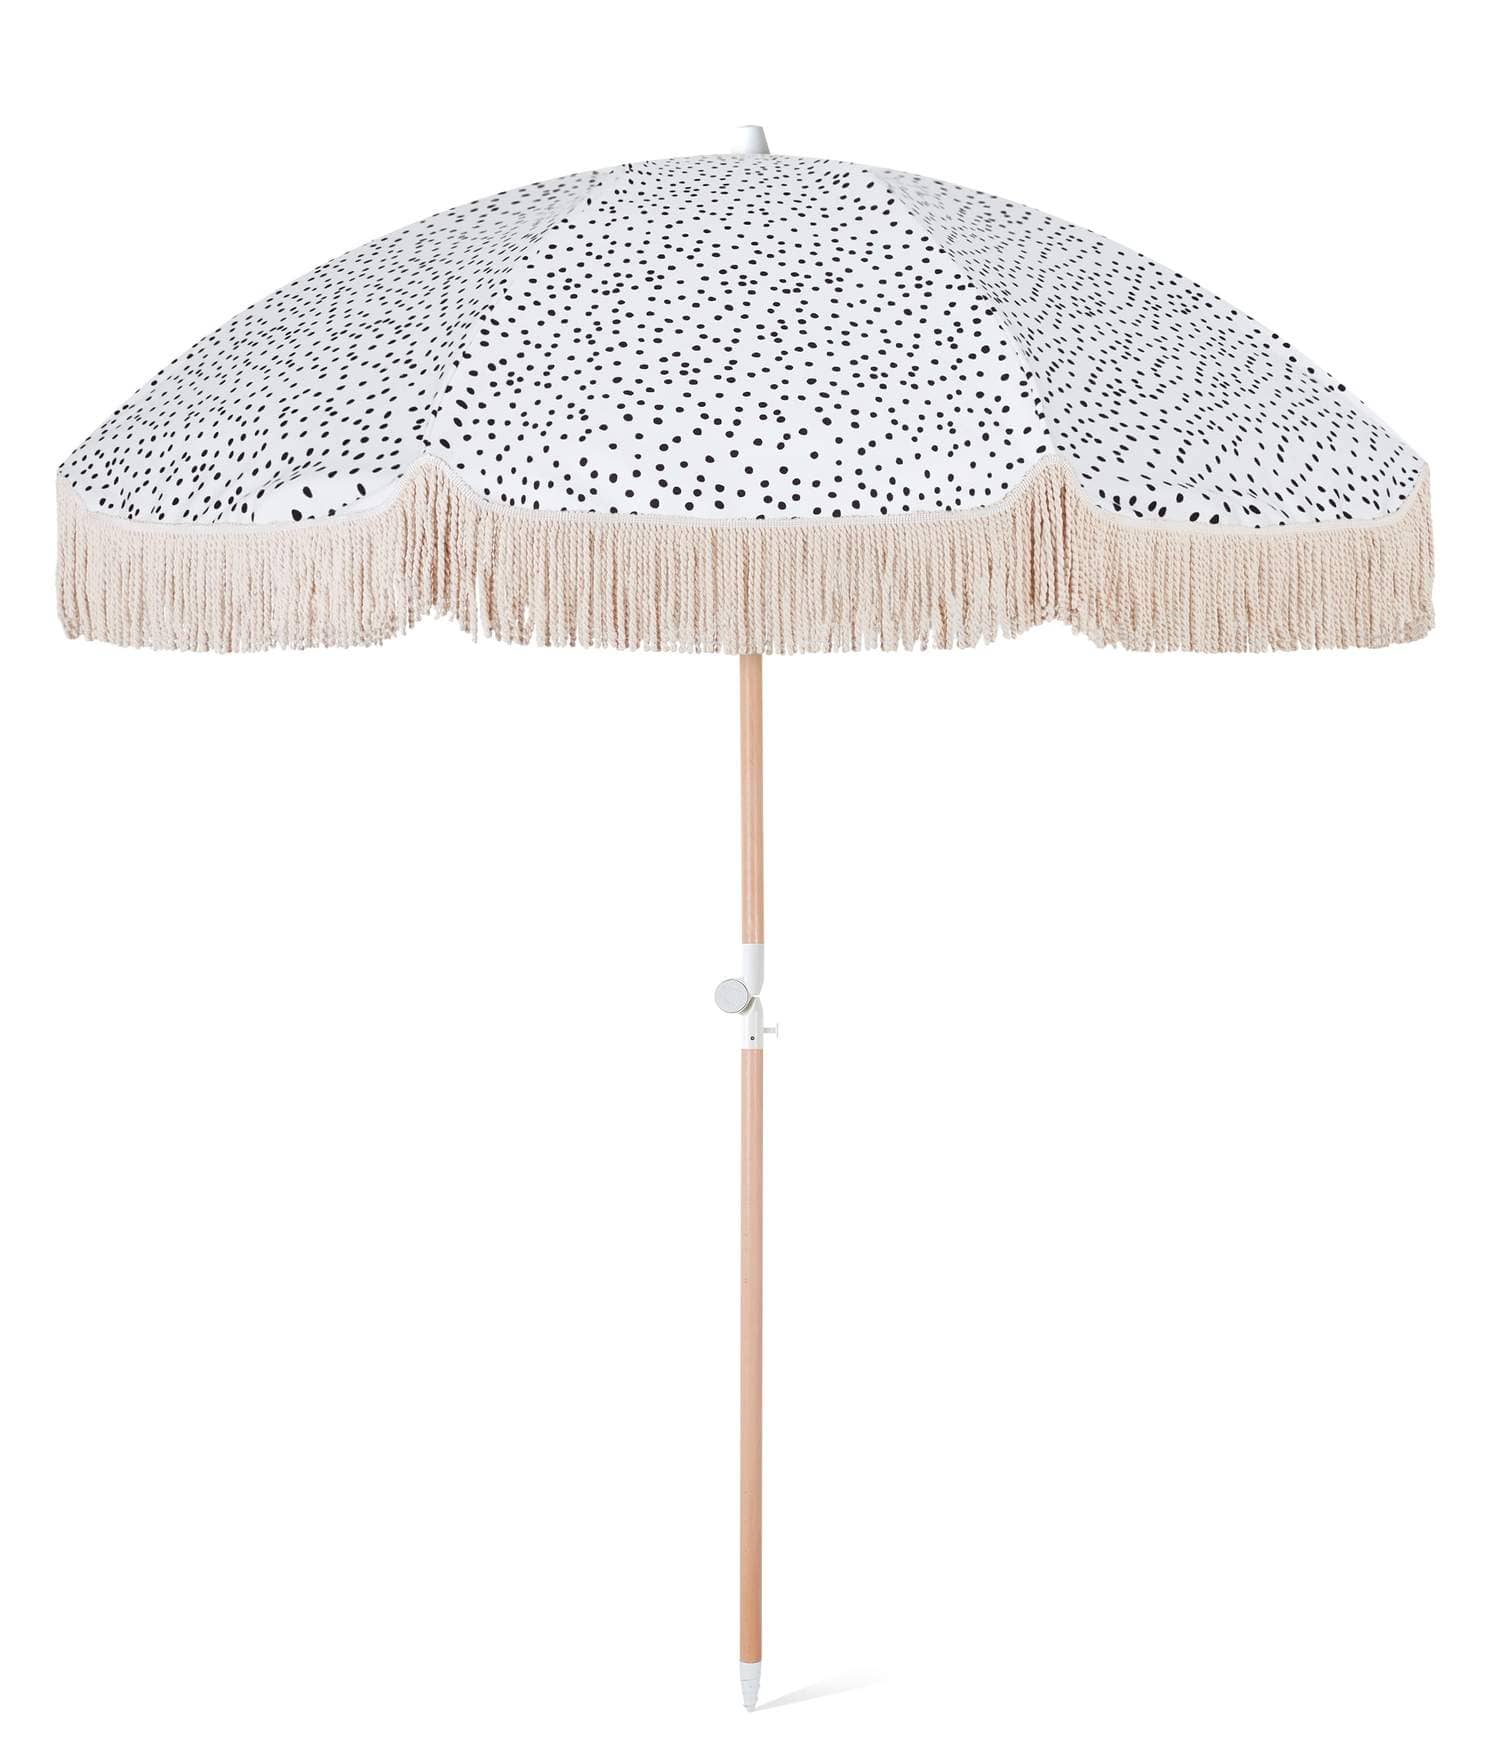 SUNDAY Umbrella - SPOTTED WITH WHITE BASE